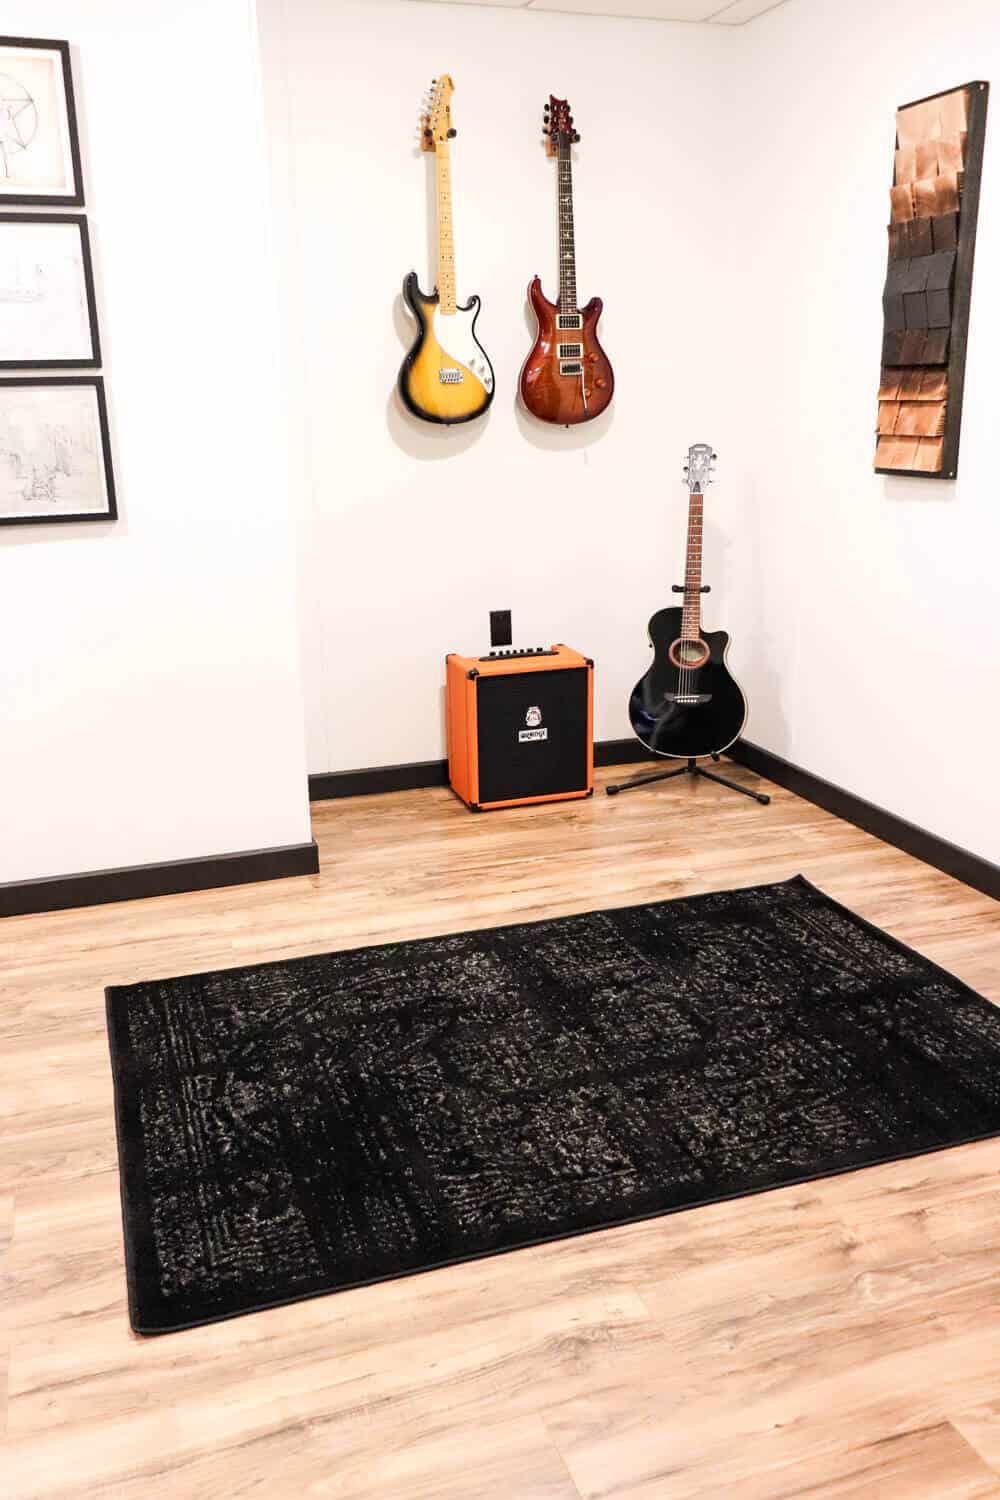 guitars hung on wall